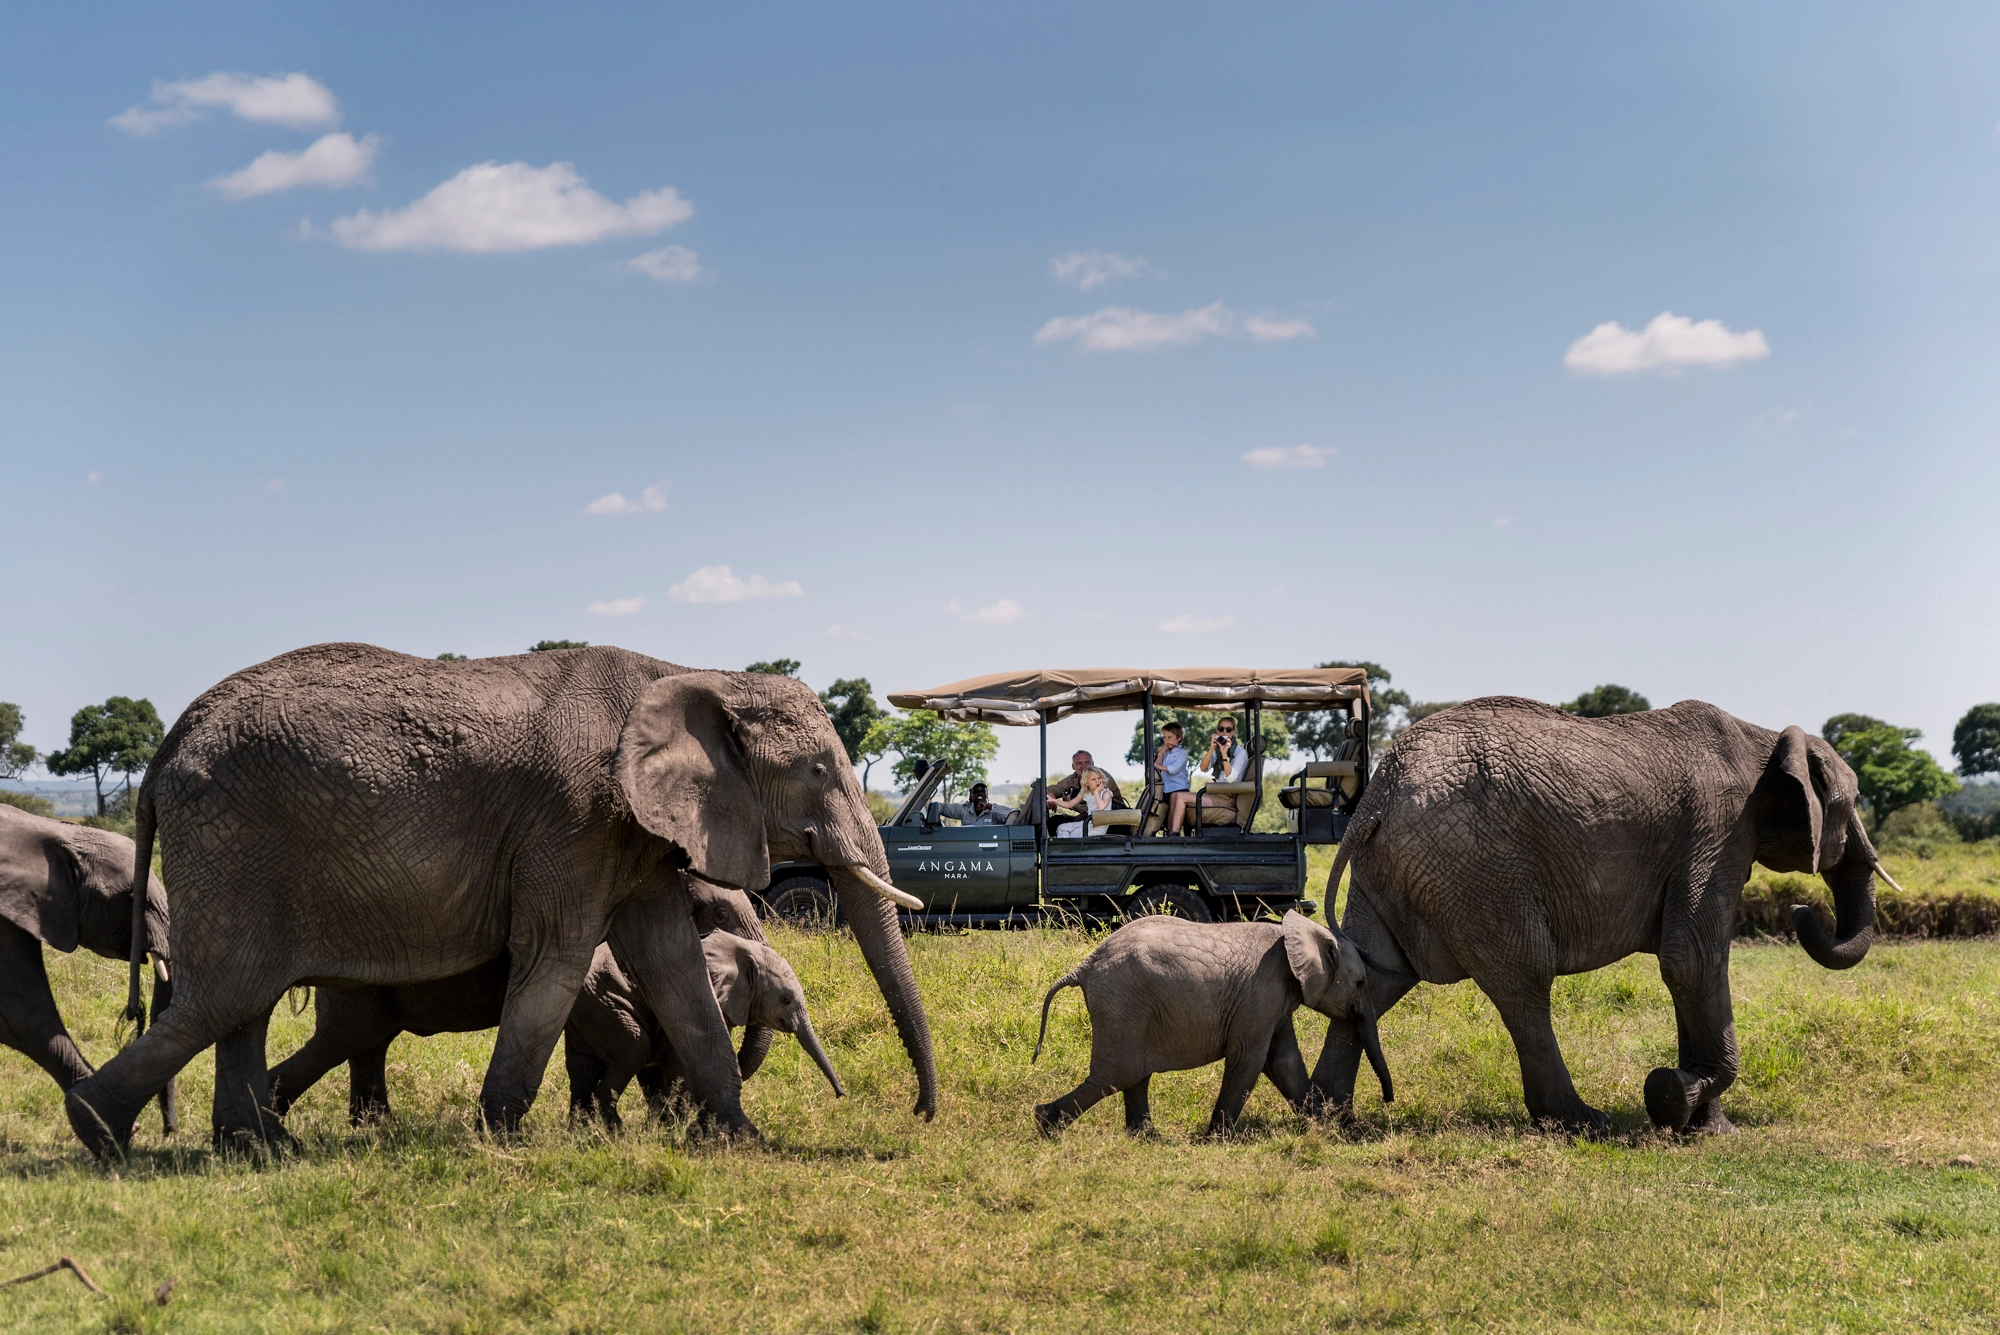 Kenya trip packages - Elephants in Masai Mara